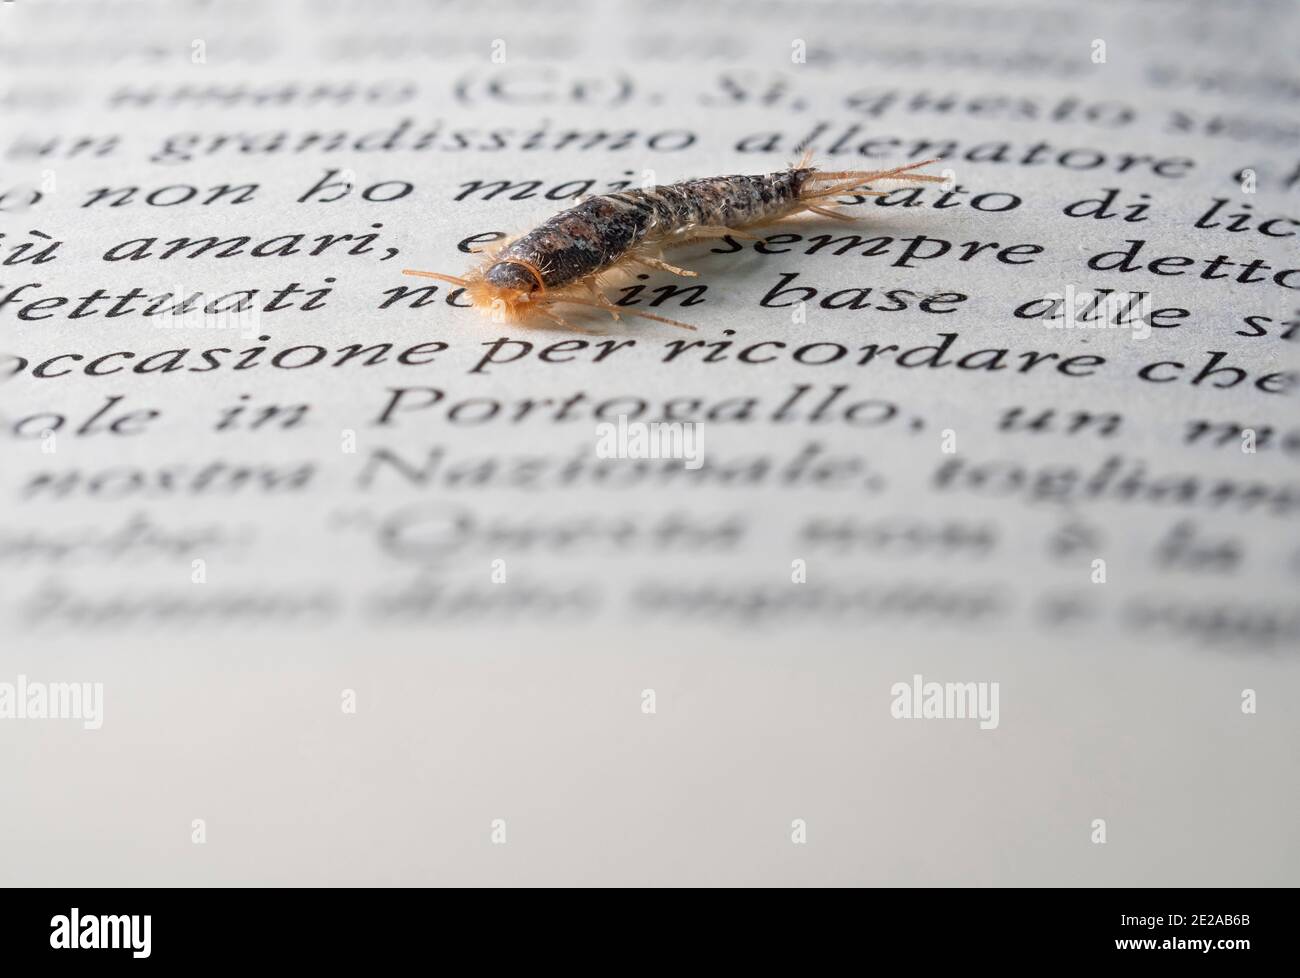 Lepisma saccharina, macro photo of a silverfish on a book, Italy Stock Photo